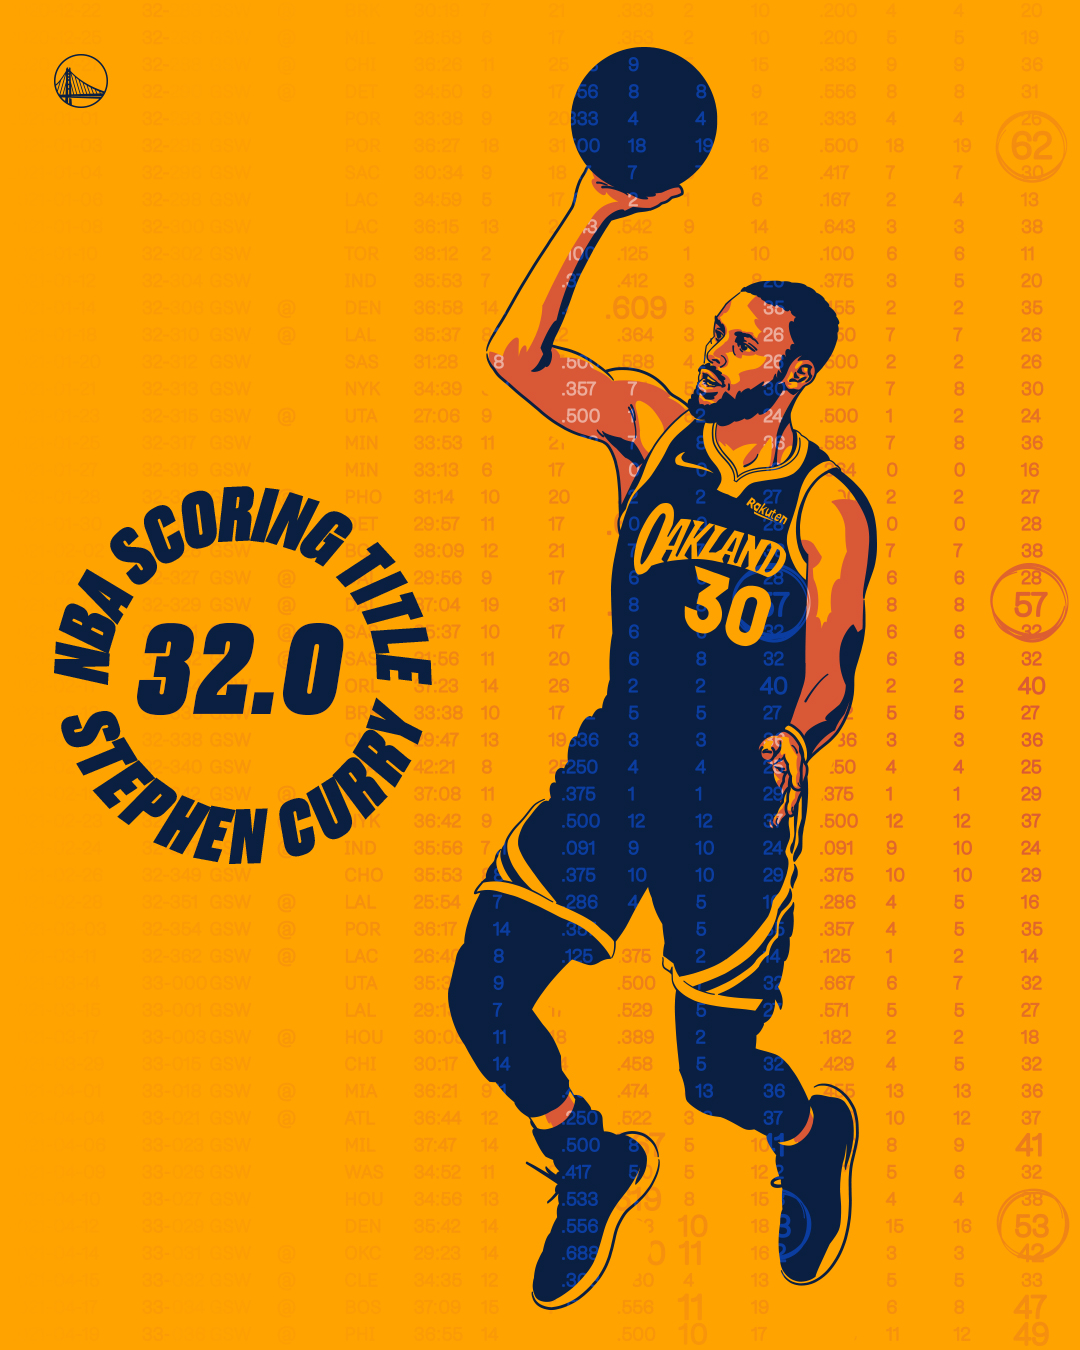 Stephen Curry wins 2021 NBA Scoring title